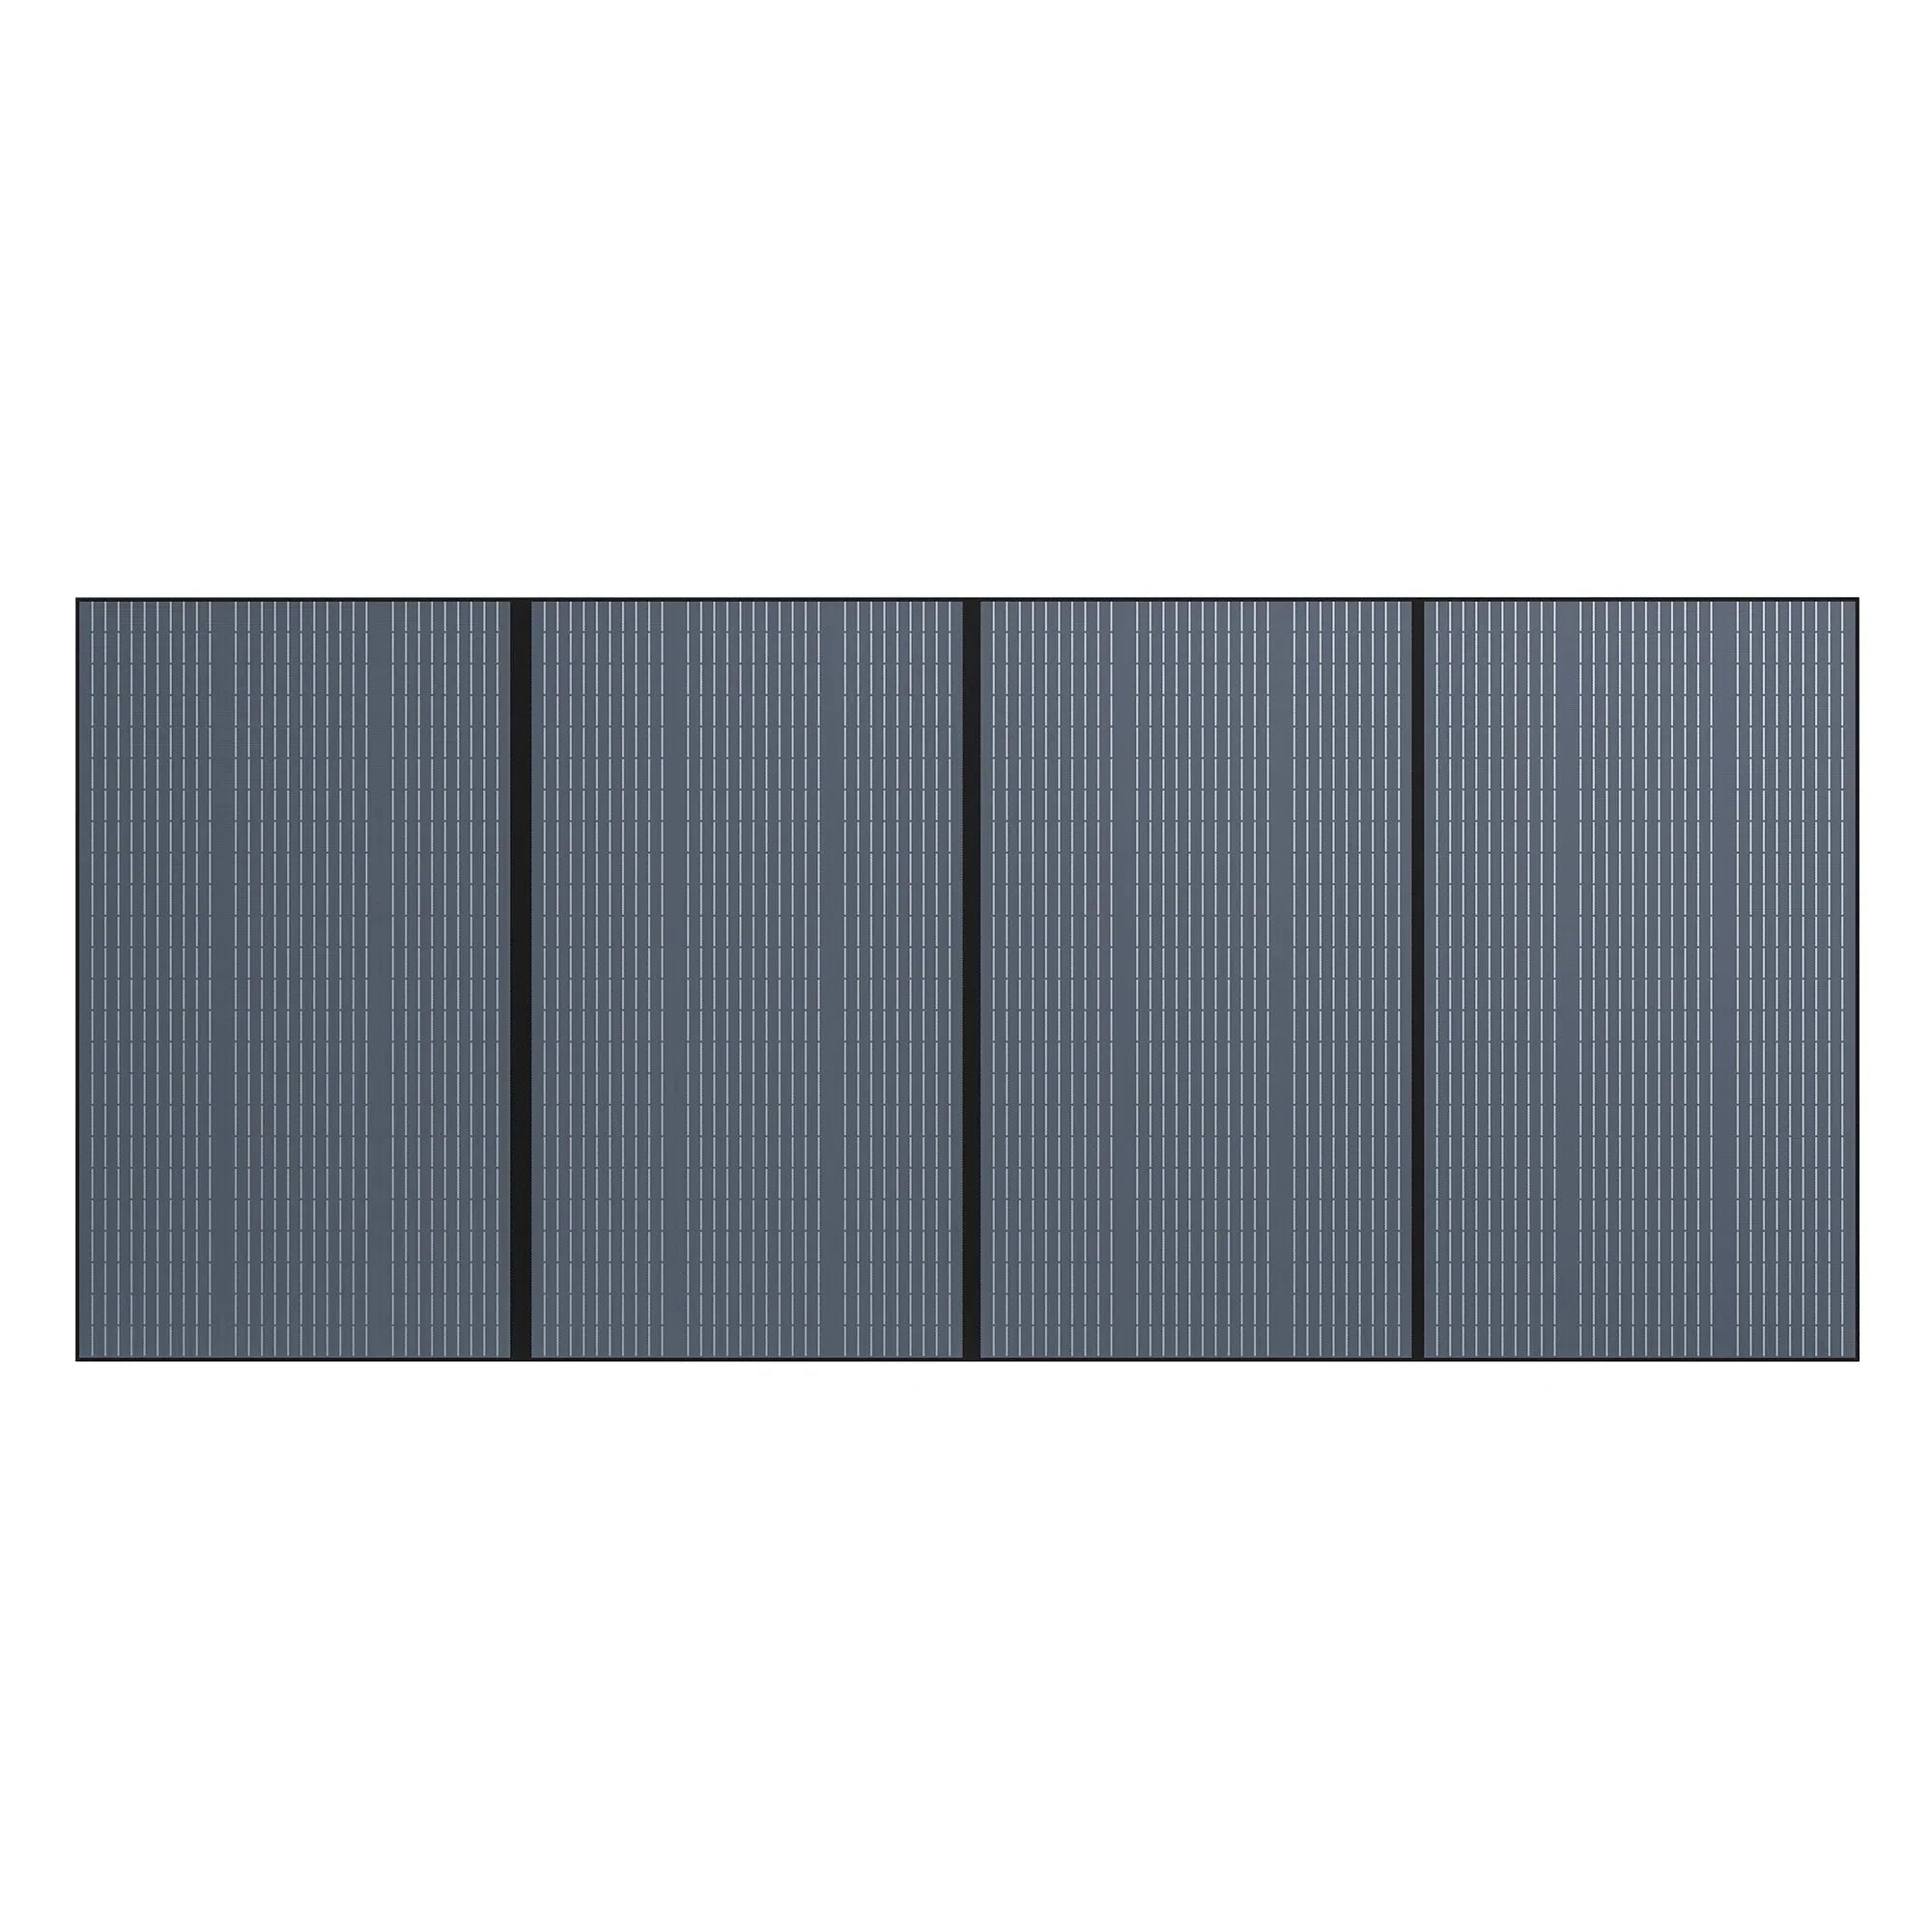 Bluetti AC200P 2,000W 2,000Wh + Solar Panels Complete Solar Generator Kit - BP-AC200P+RS-M100+RS-30102 - Avanquil